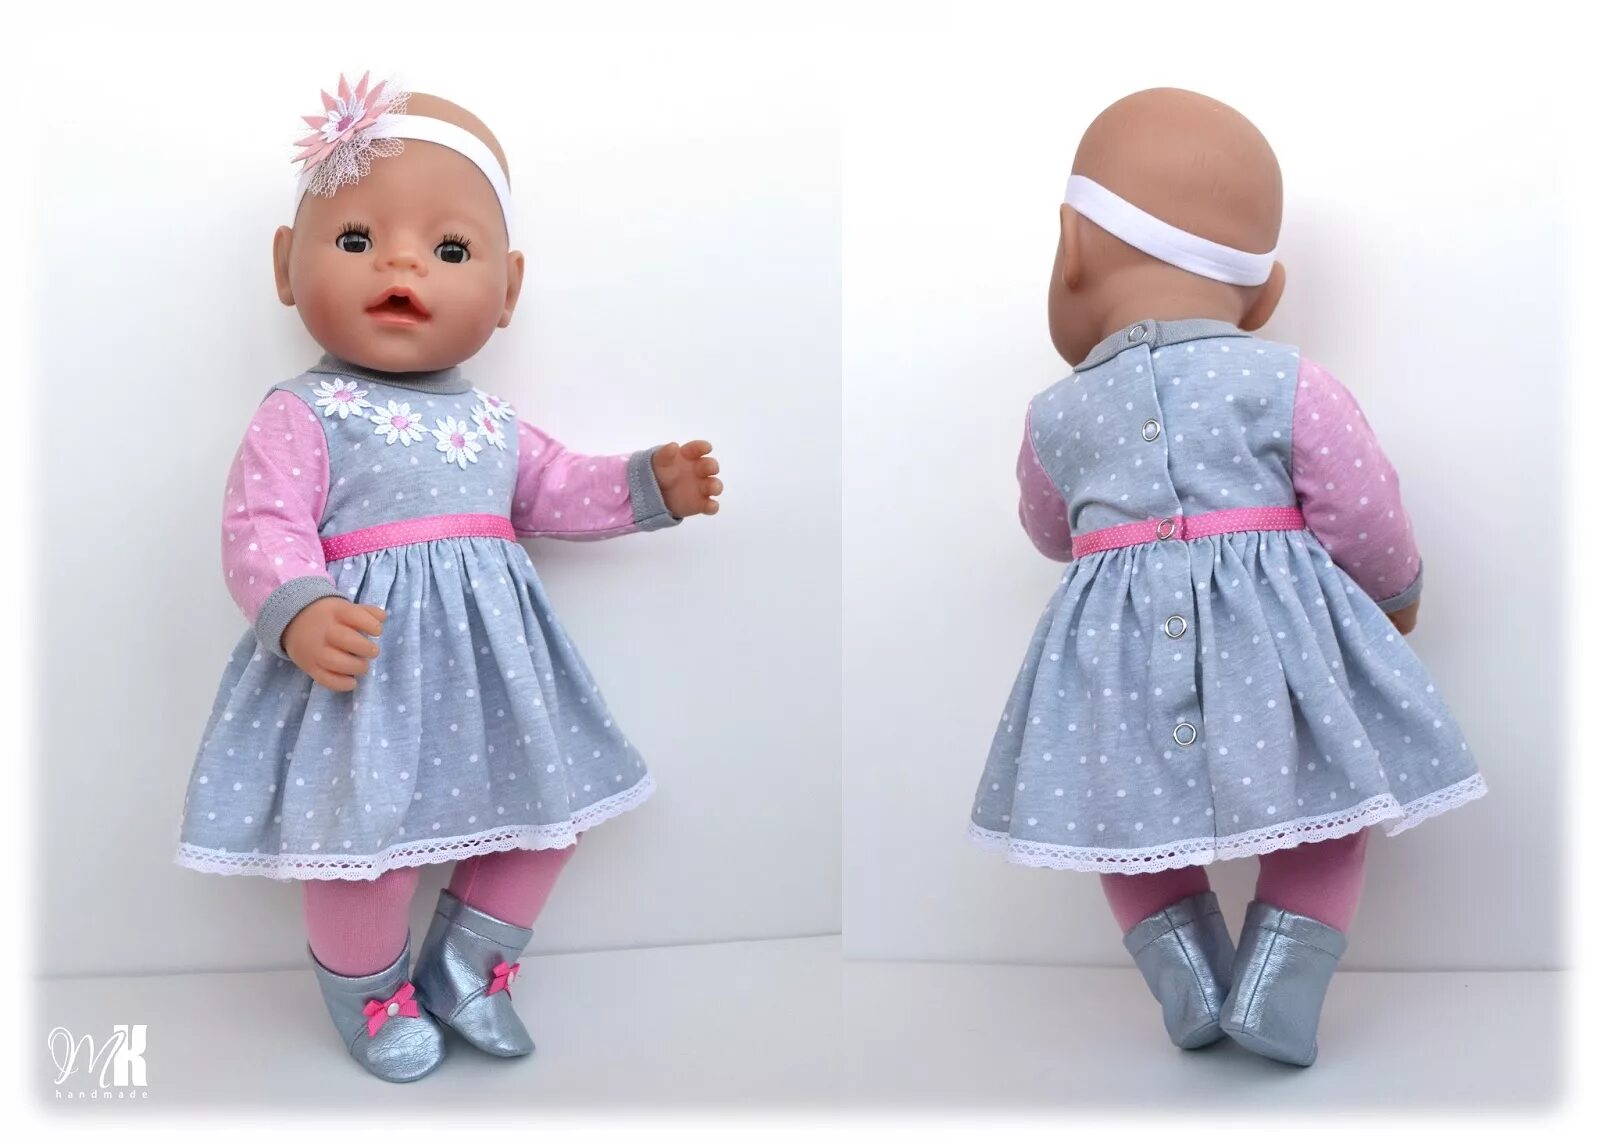 Кукла пупс одежда для кукол. Одежда для кукол. Платье для пупса. Одежда для пупсиков. Одежда для кукол пупсиков.